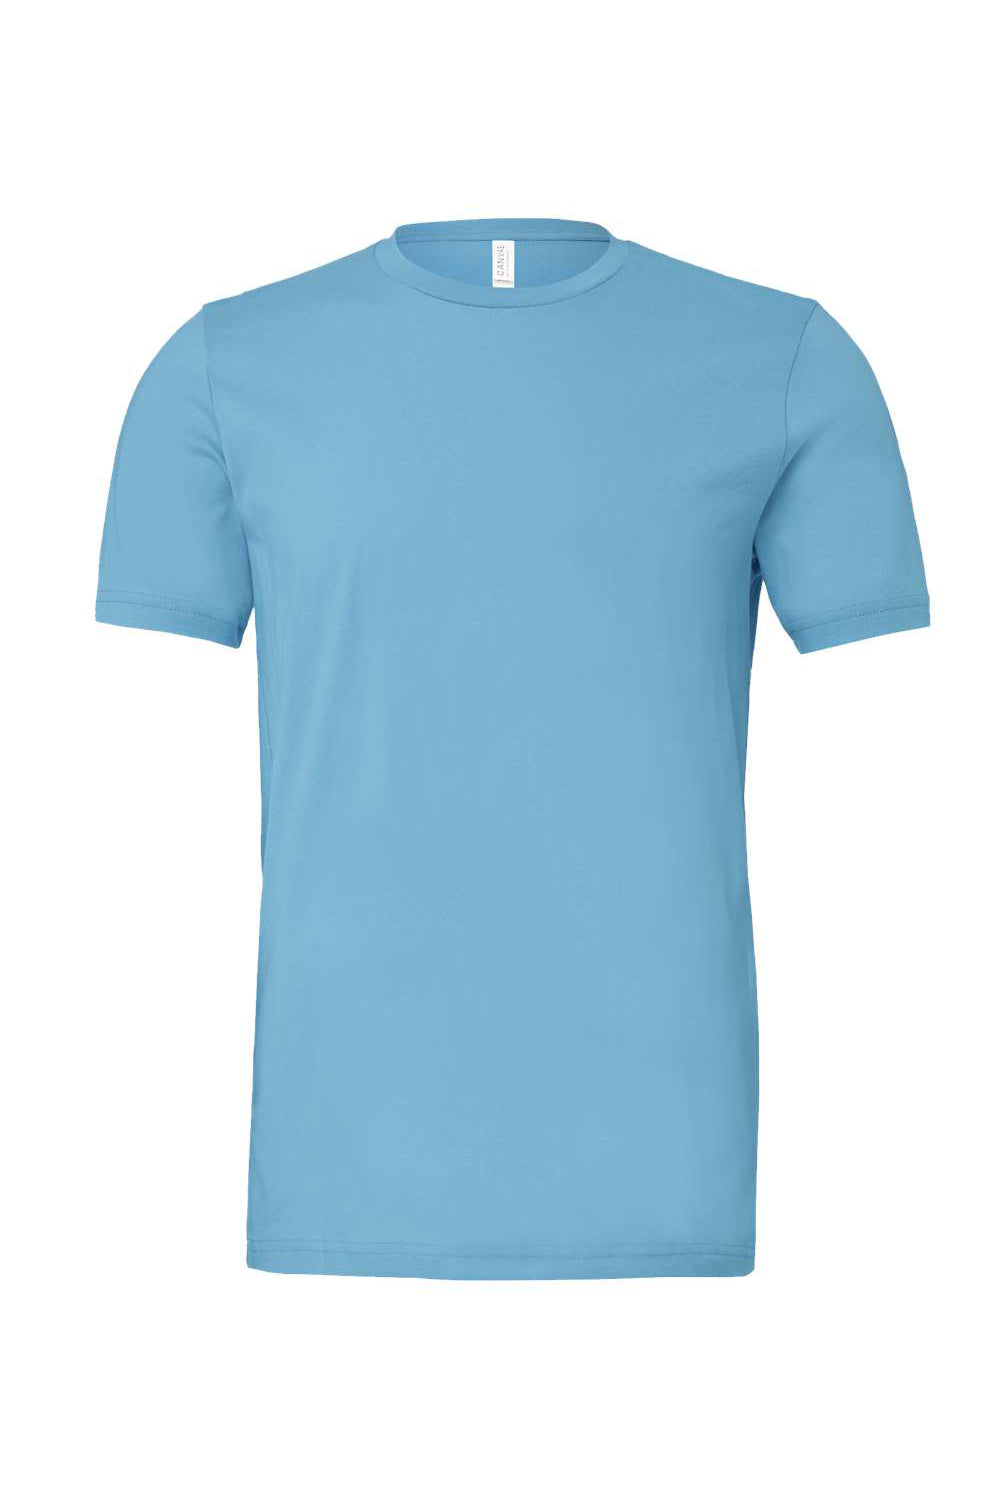 Bella + Canvas BC3001/3001C Mens Jersey Short Sleeve Crewneck T-Shirt Ocean Blue Flat Front